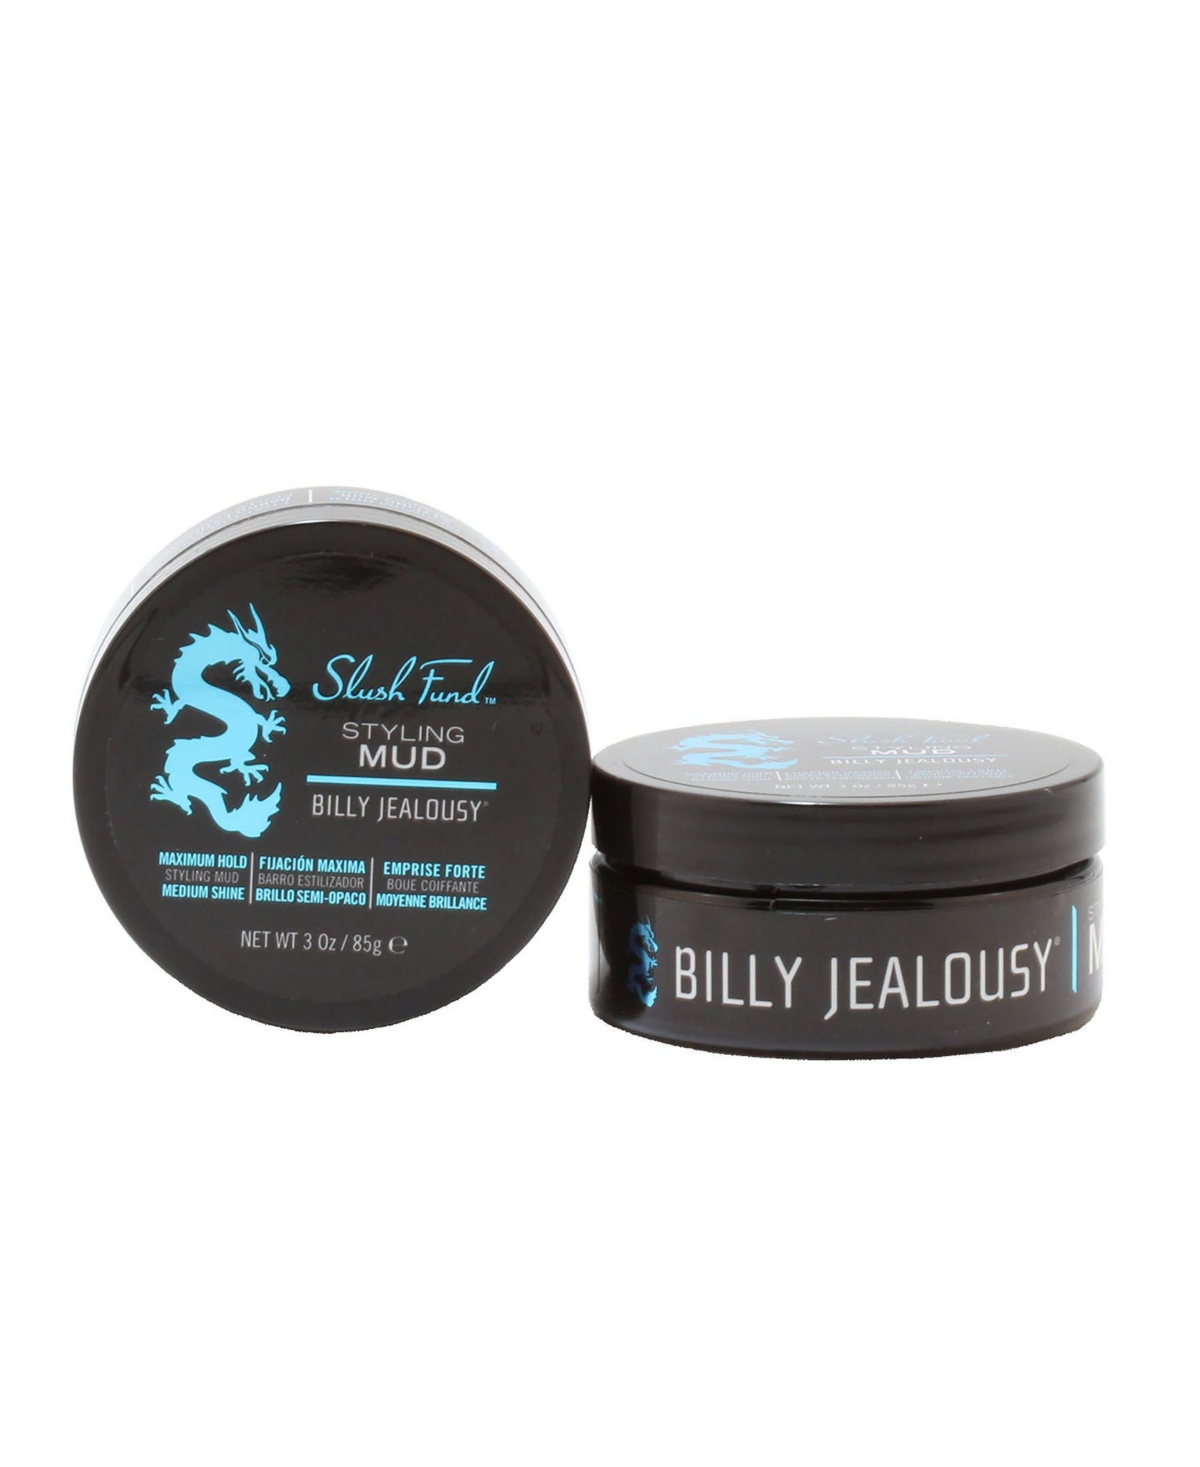 Billy Jealously Hair Mud Slush Fund Styling, 3 Oz